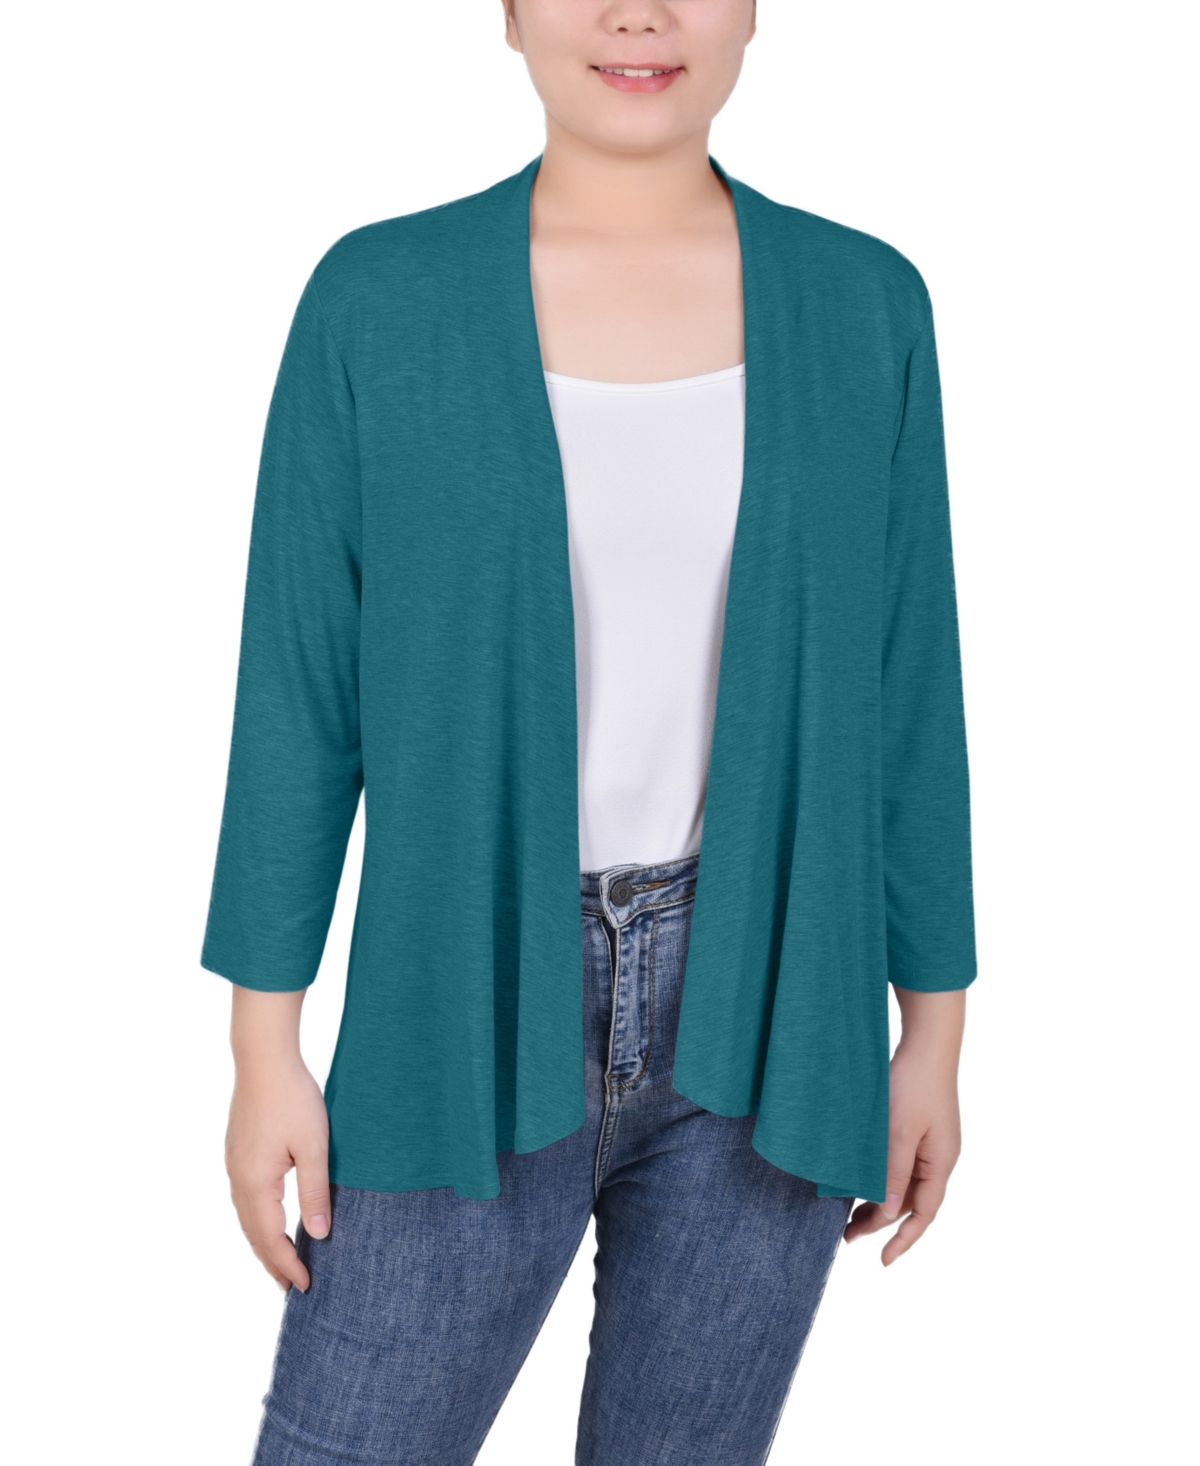 Women's Solid 3/4 Sleeve Cardigan - Emerald